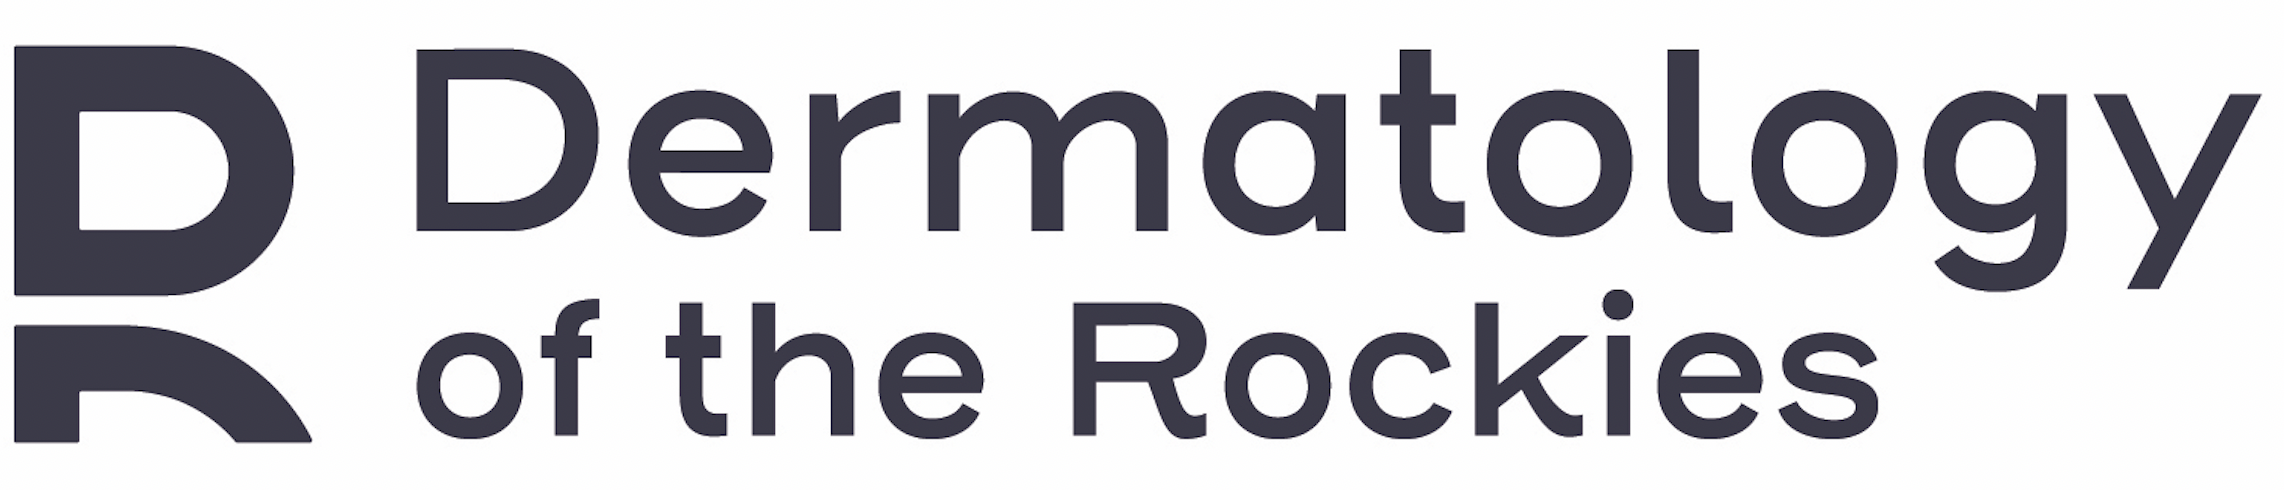 Dermatology of the Rockies logo.png